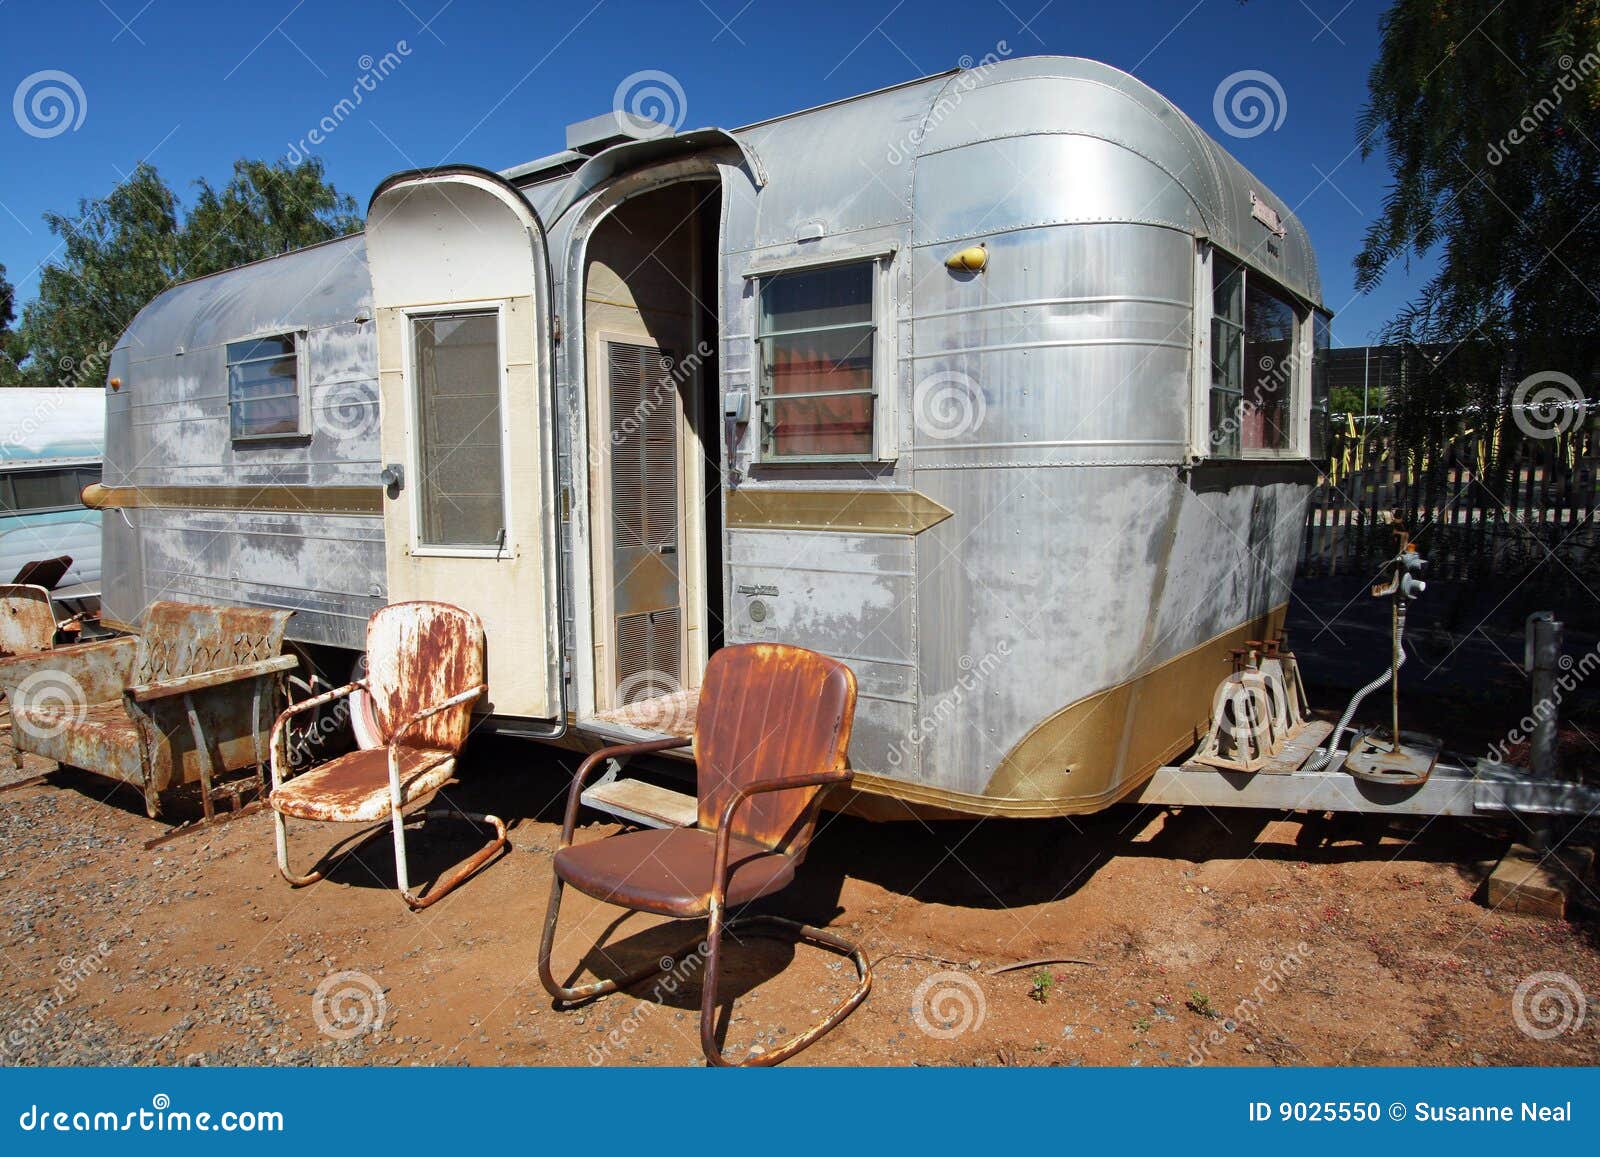 trailer-home-windows-9025550.jpg